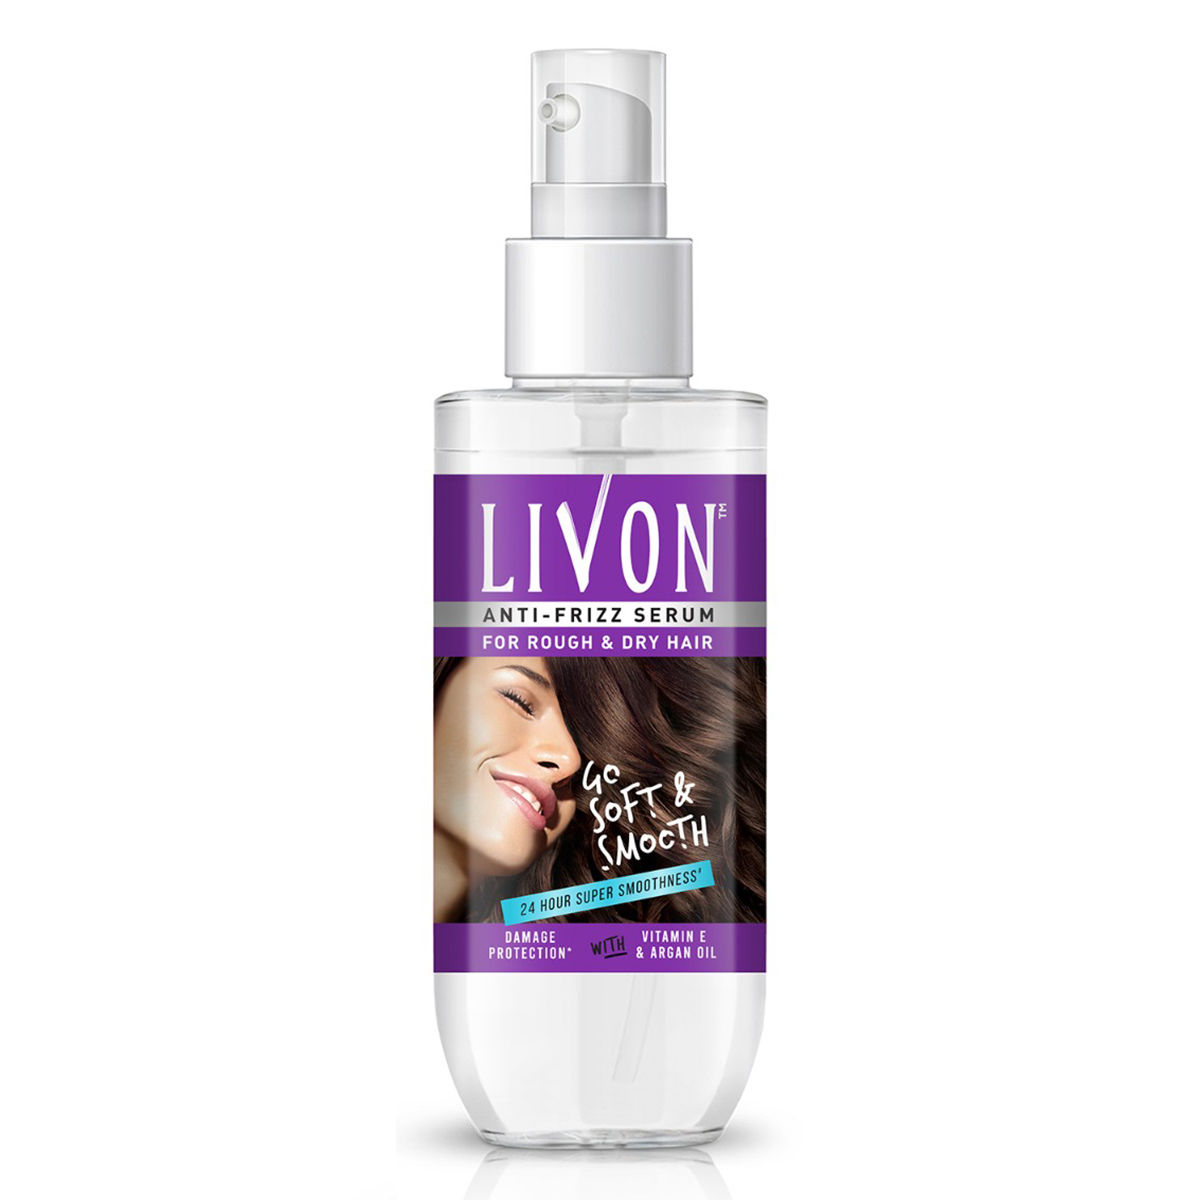 Buy Livon Anti-Frizz Serum For Rough & Dry Hair, 50 ml Online